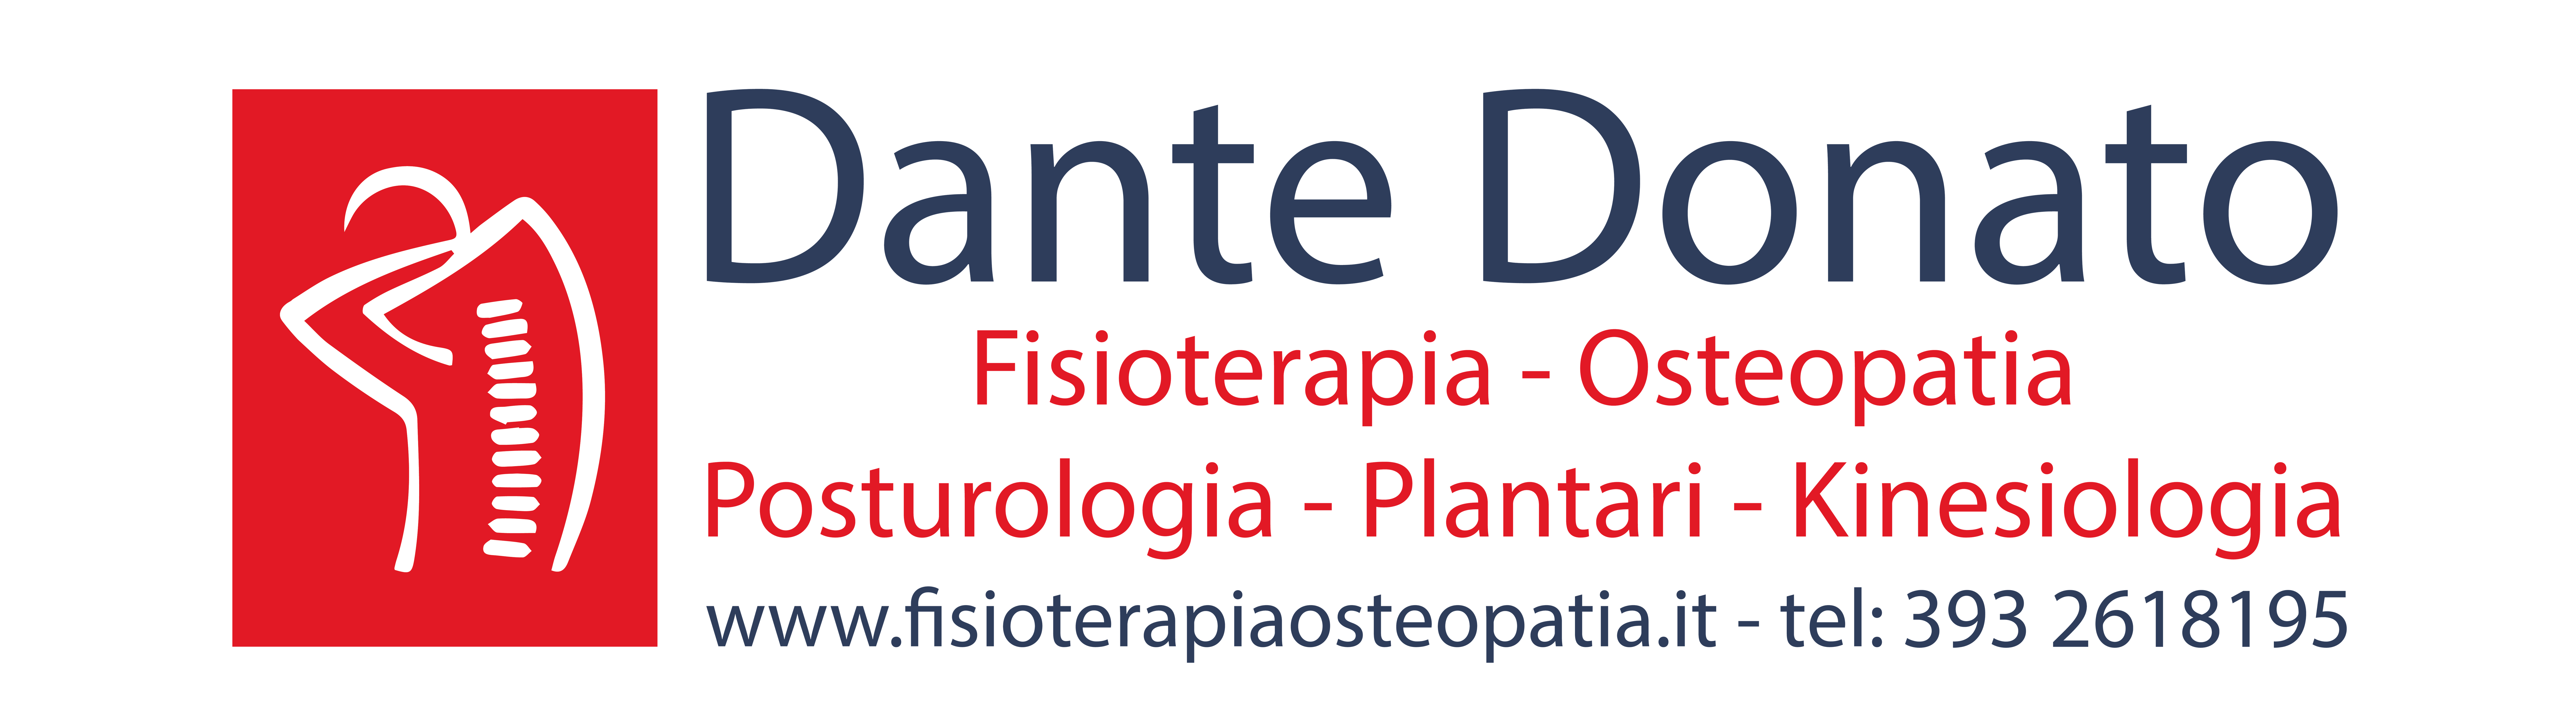 Dottor Dante Donato Fisioterapia Osteopatia Posturologia Plantari Kinesiologia